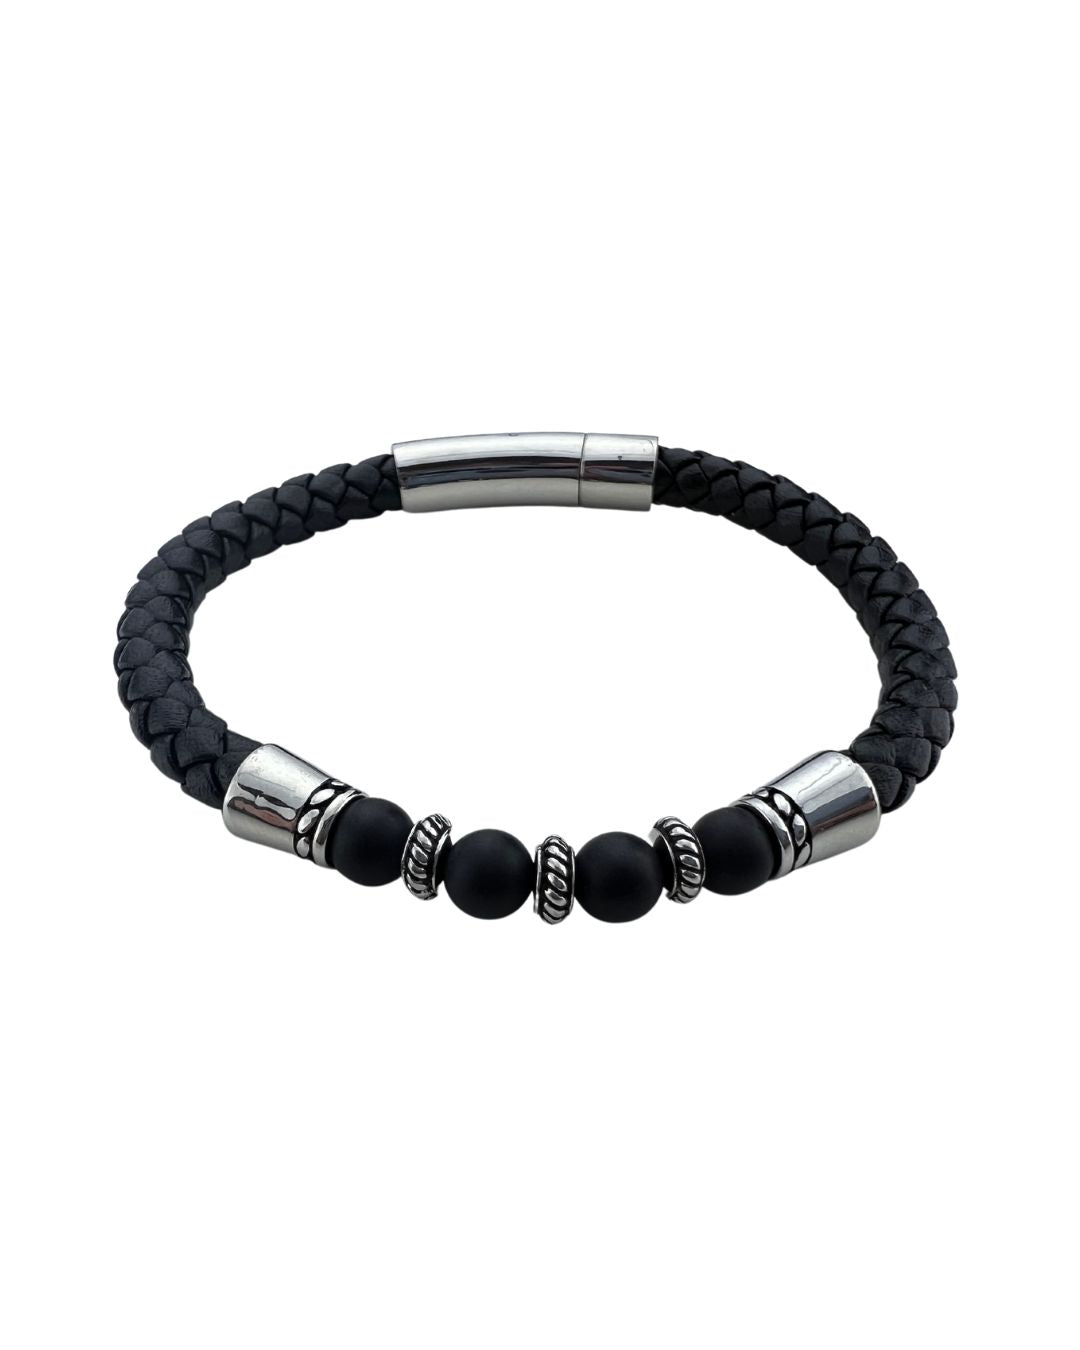 Black Braided Leather & Beads Bracelet